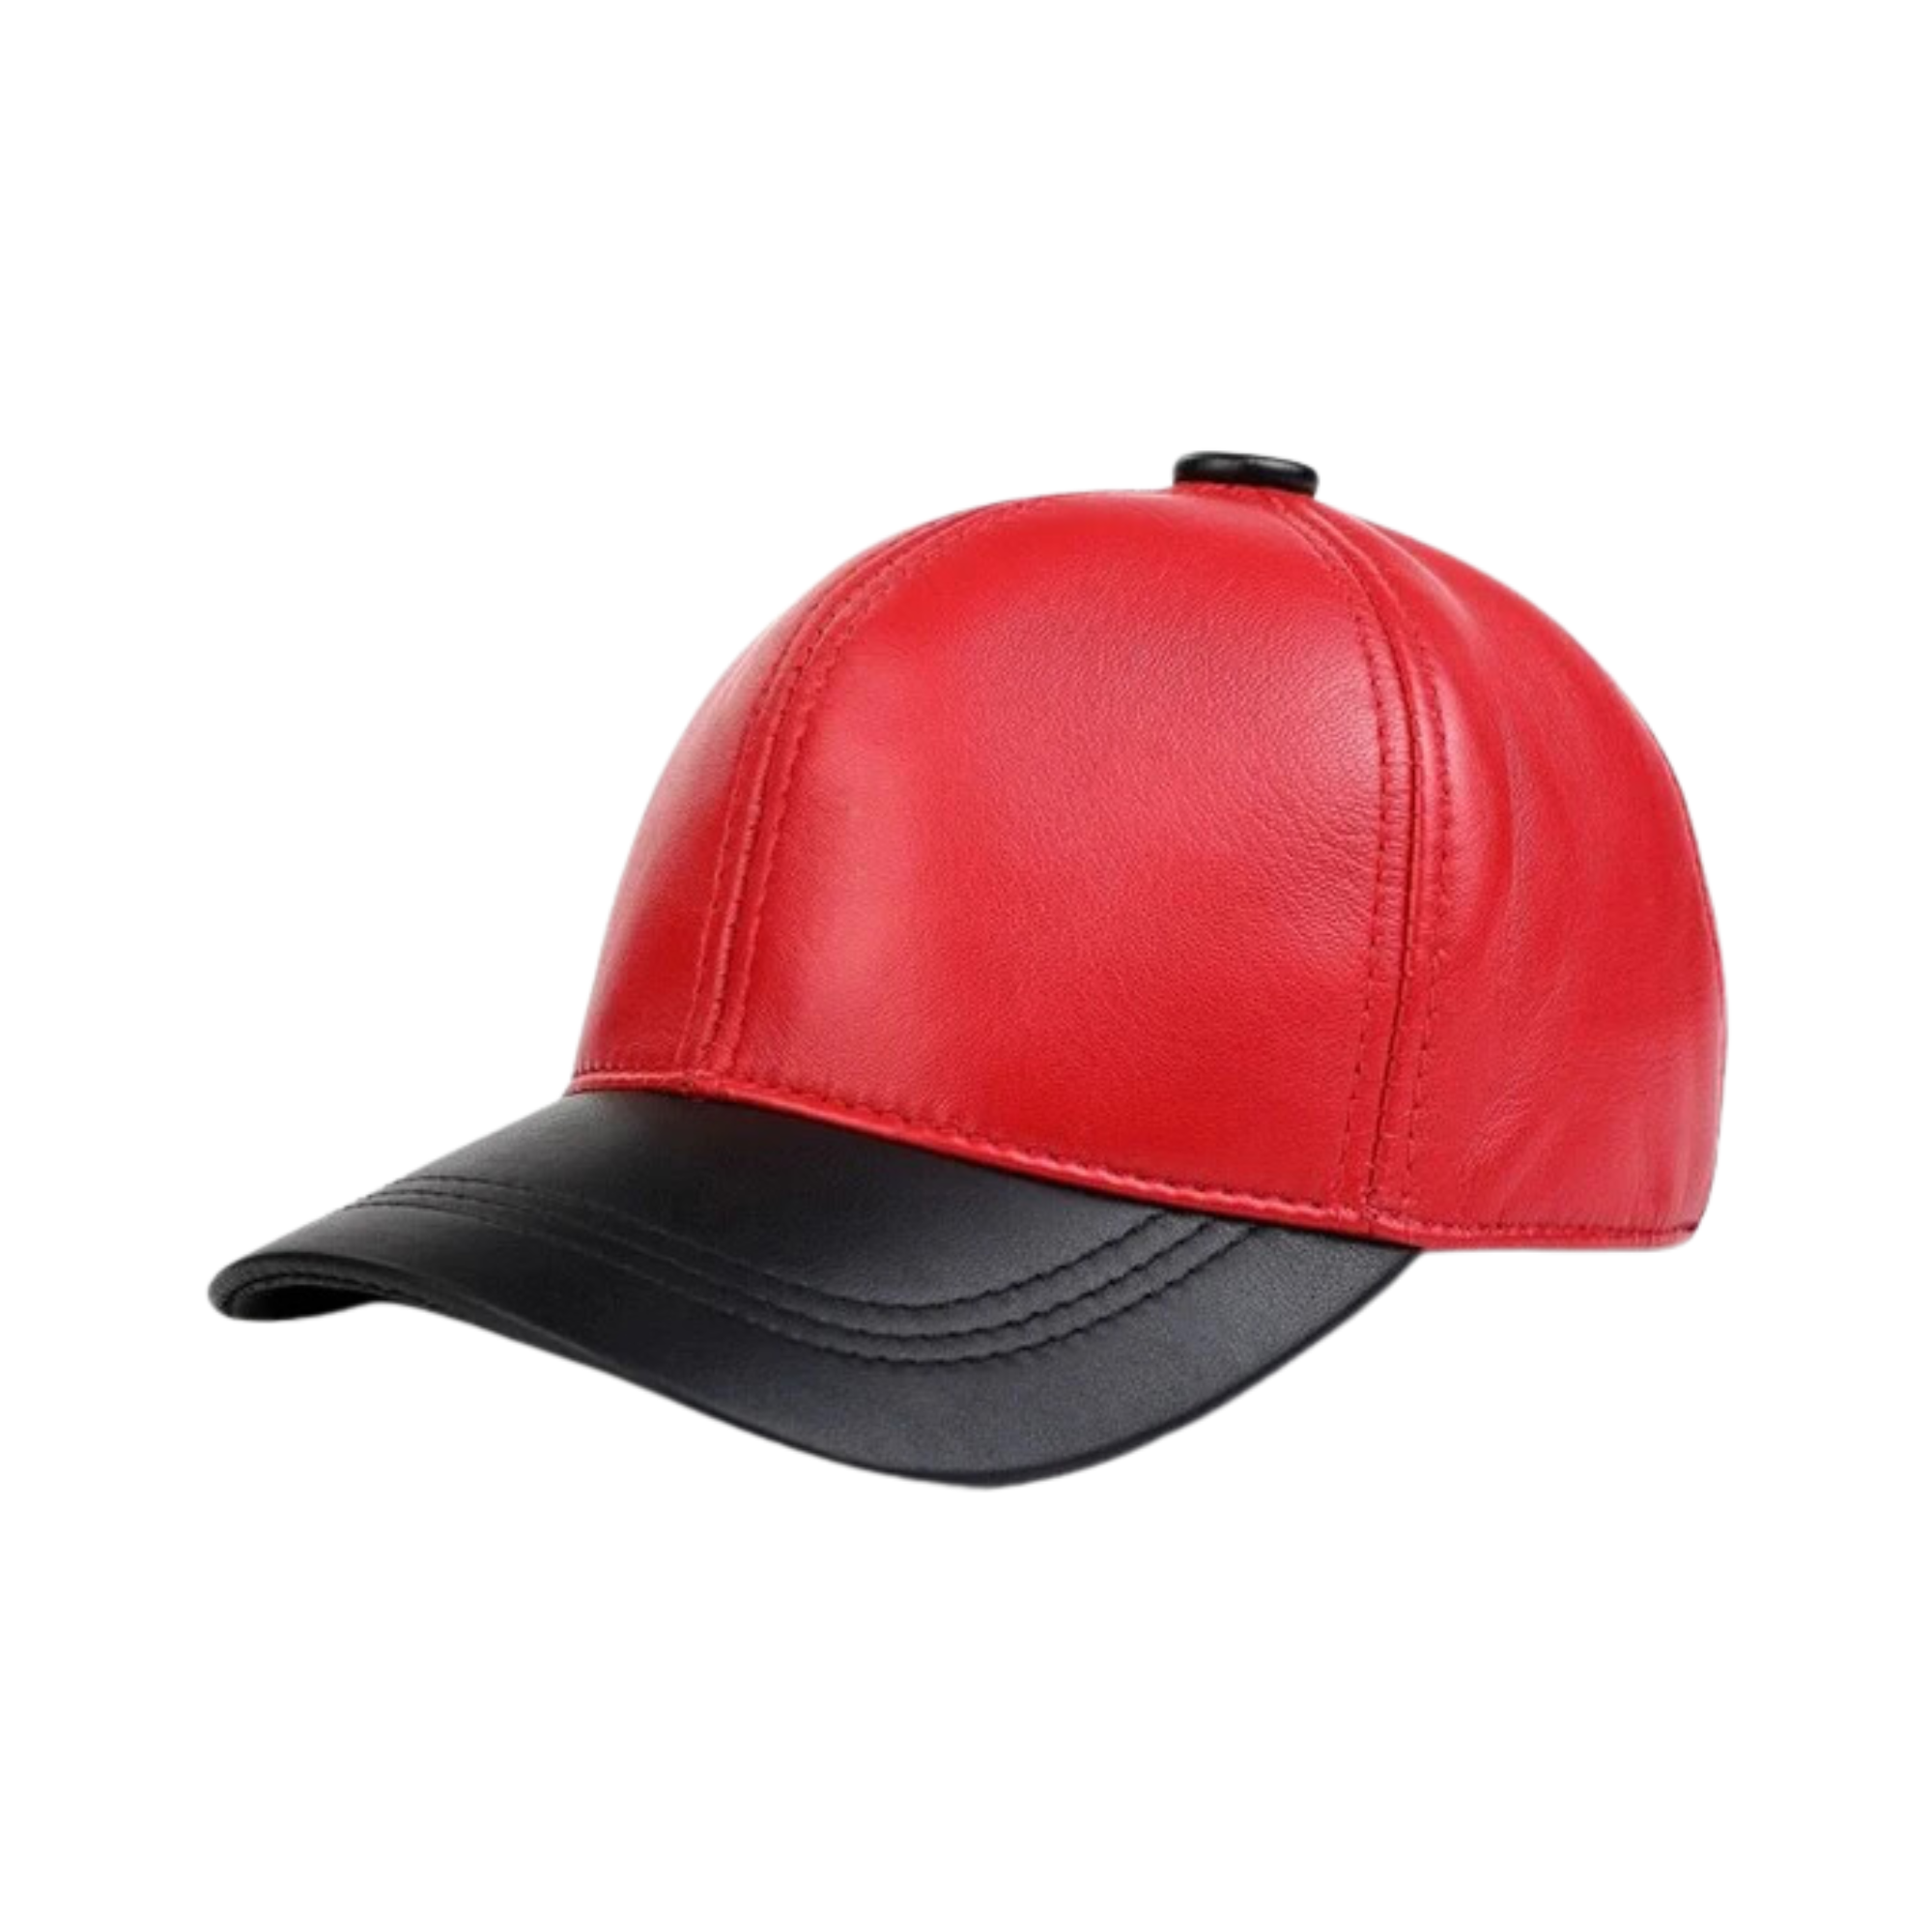 Dual Color Leather Baseball Cap